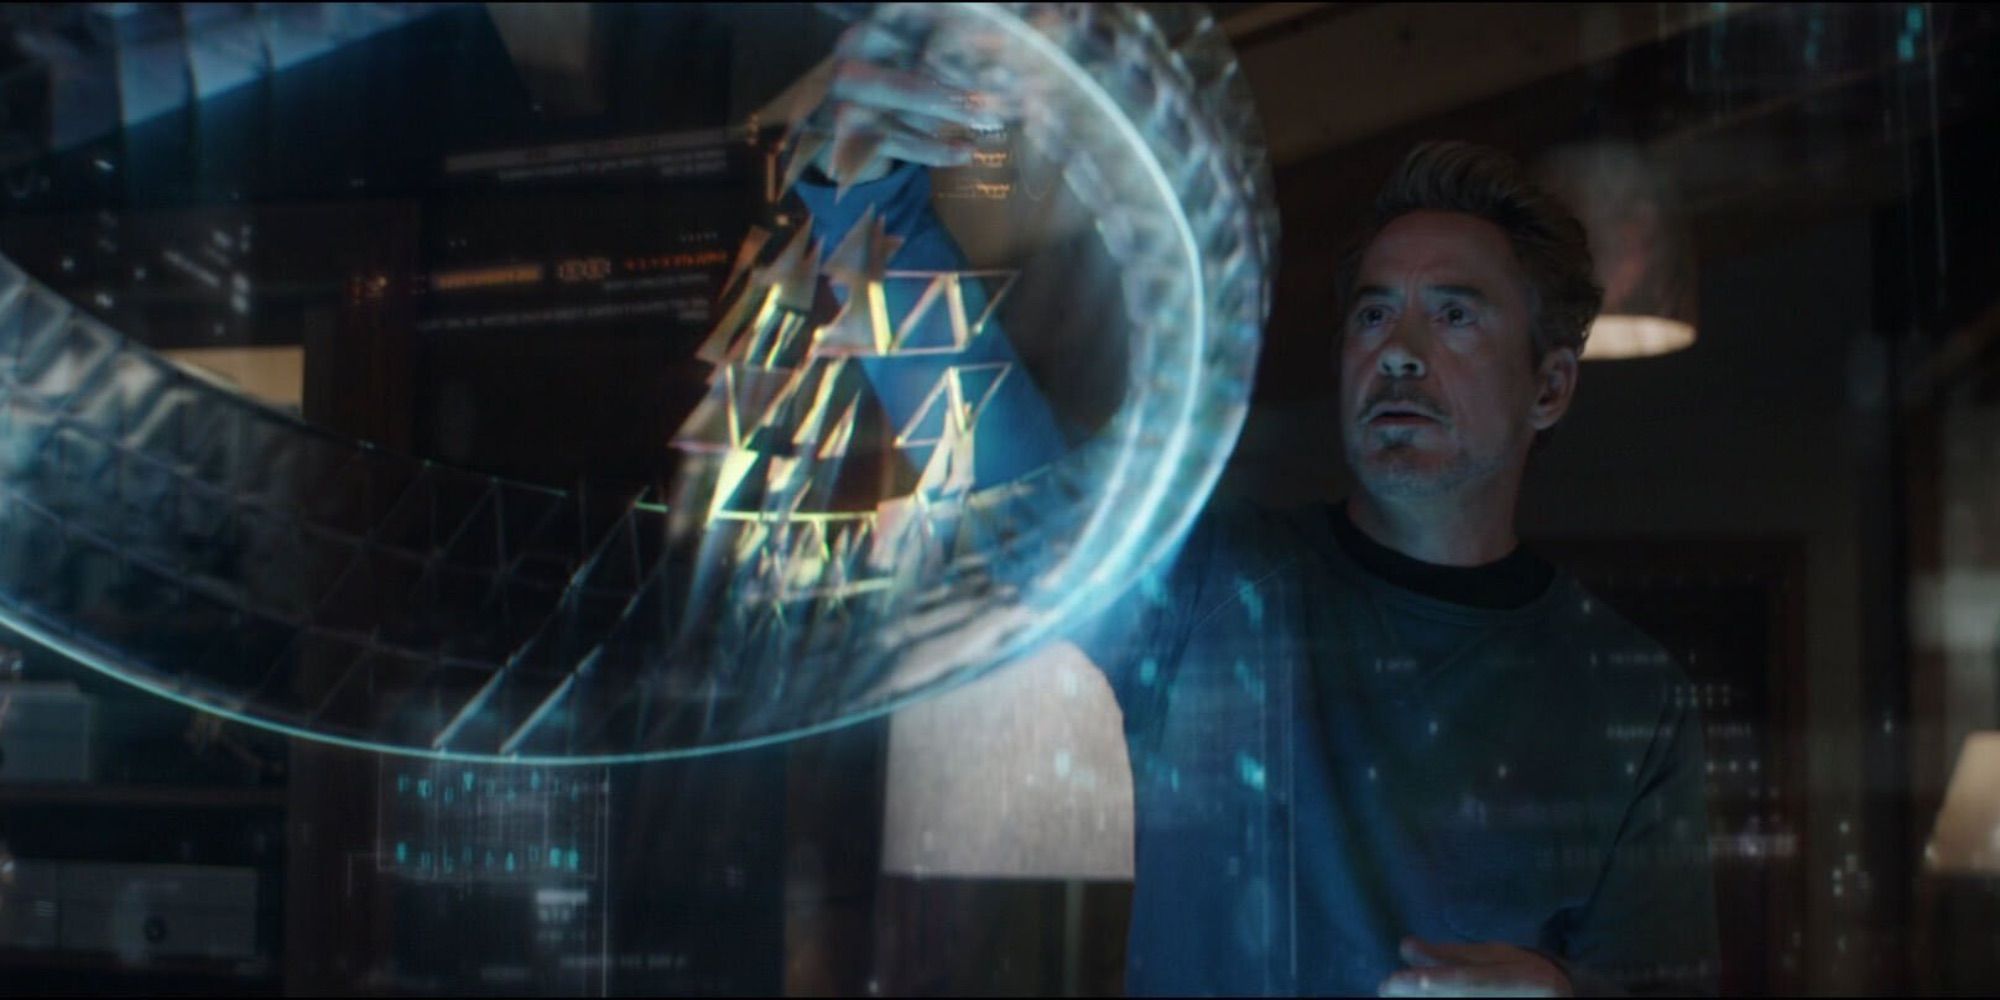 Tony Stark figures out time travel in Avengers: Endgame